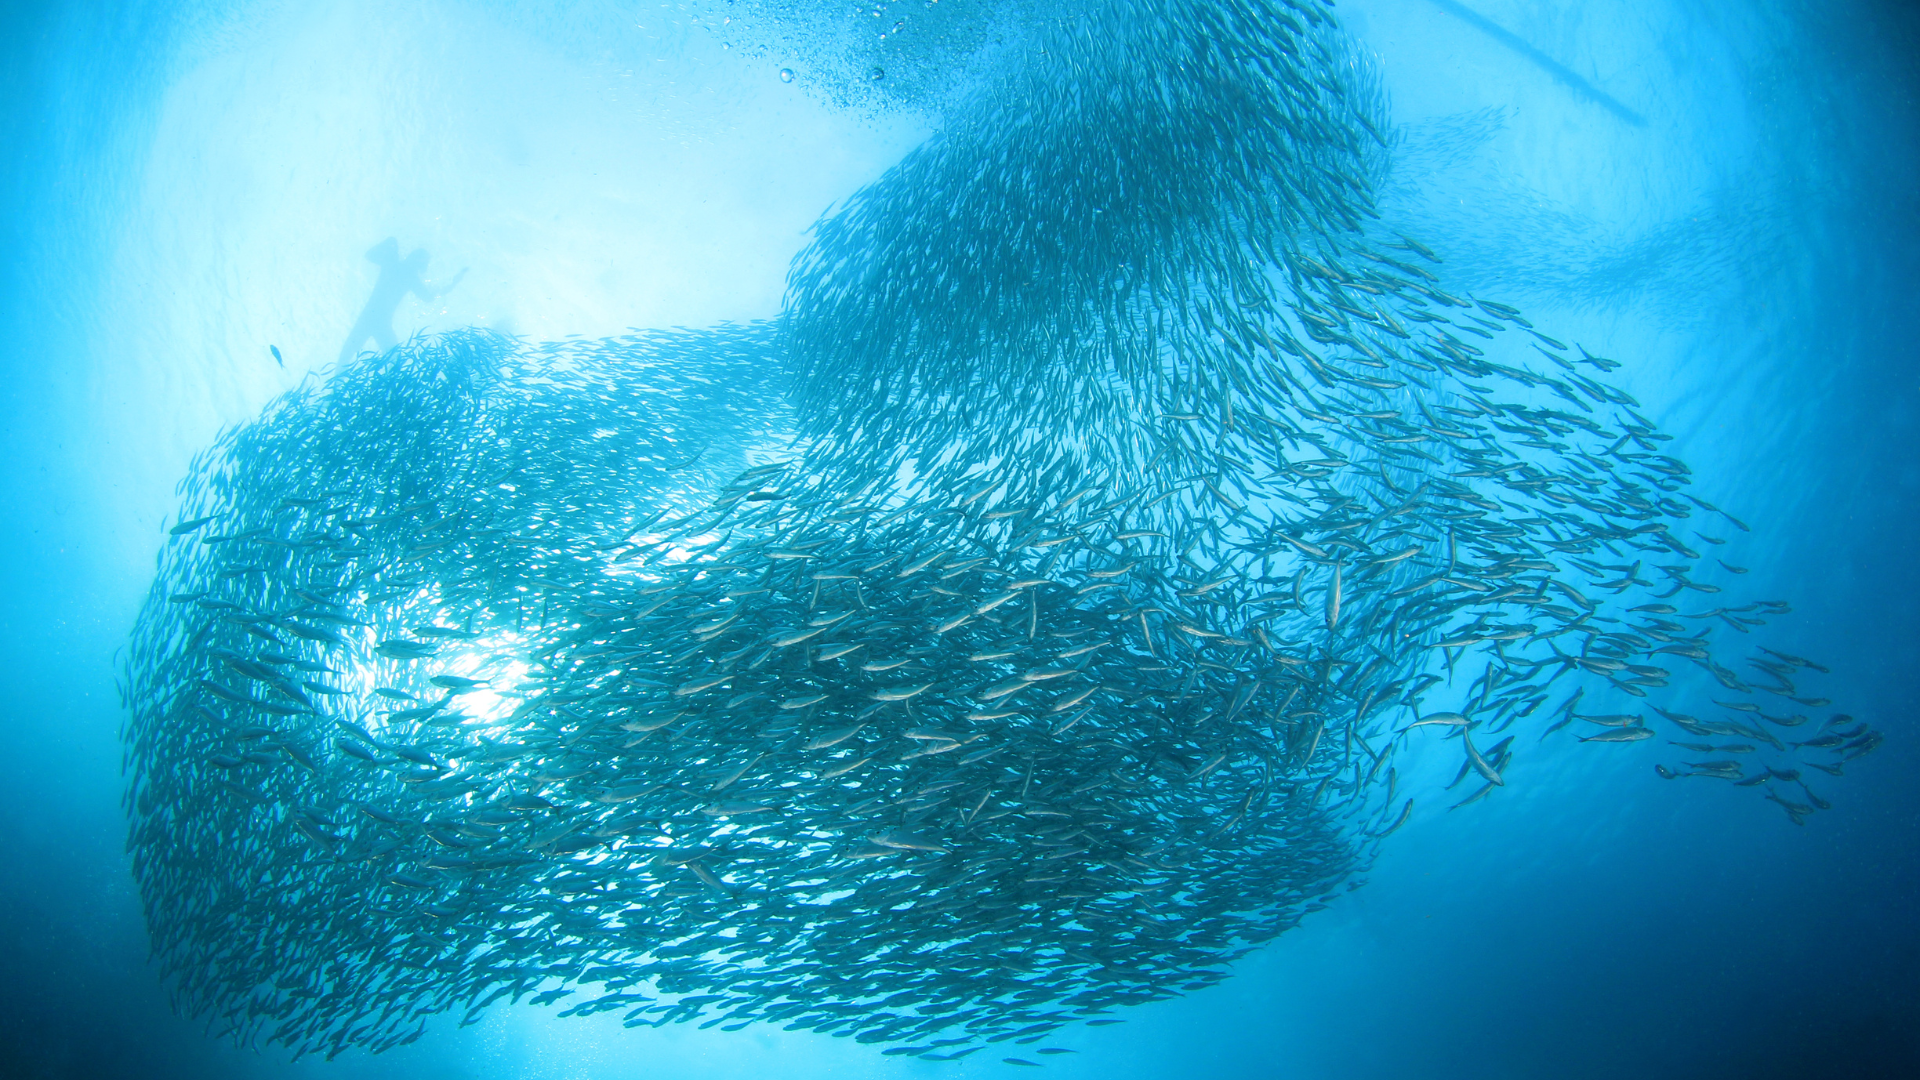 School of Sardine Fish